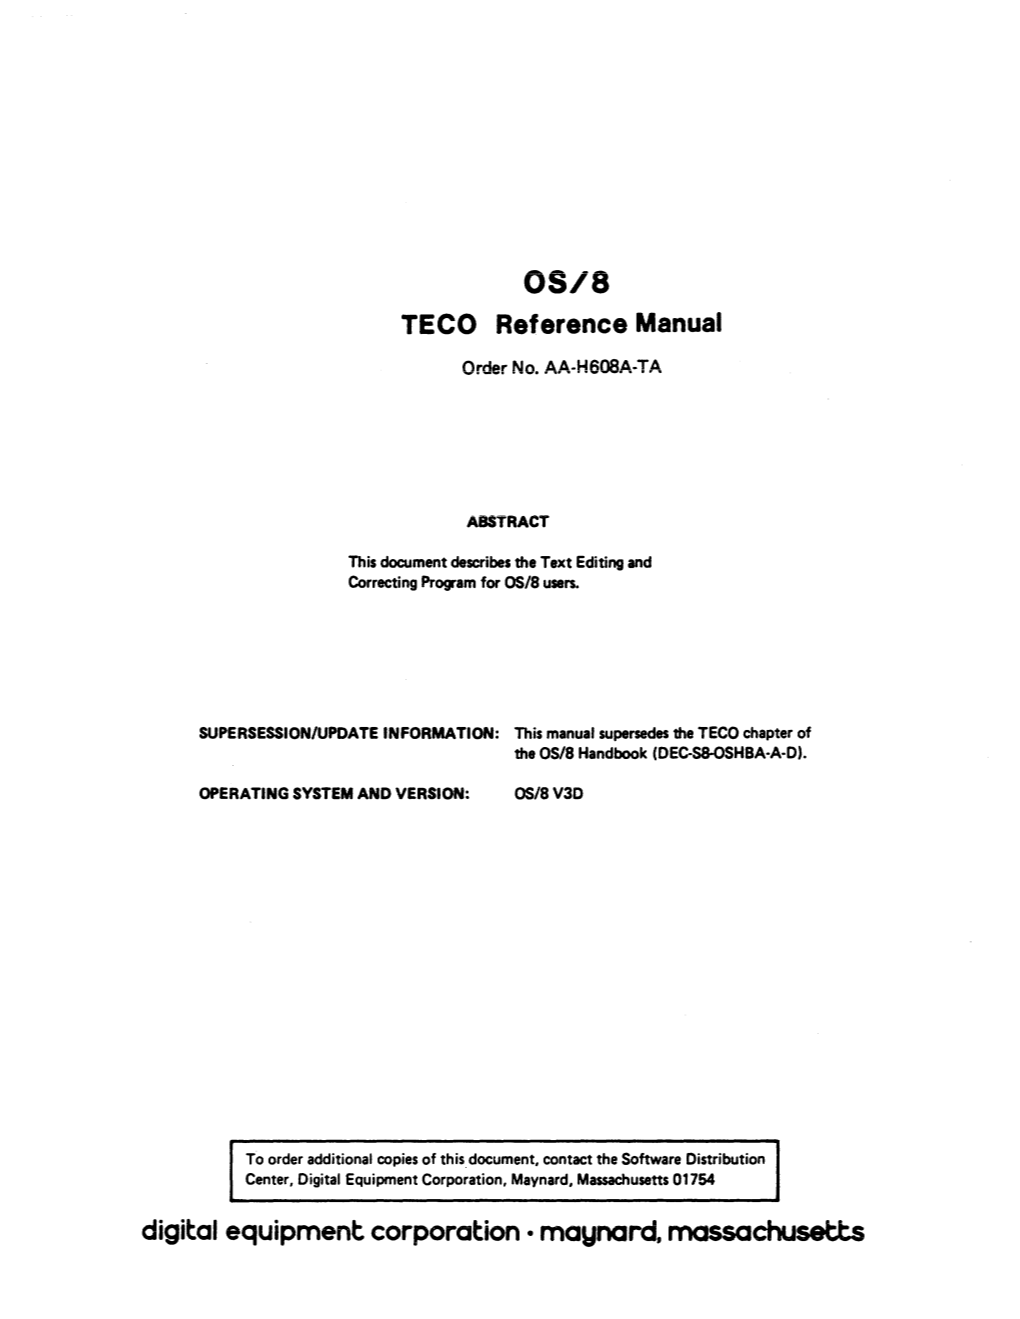 TECO Reference Manual Digital Equipment Corporation • Maynard